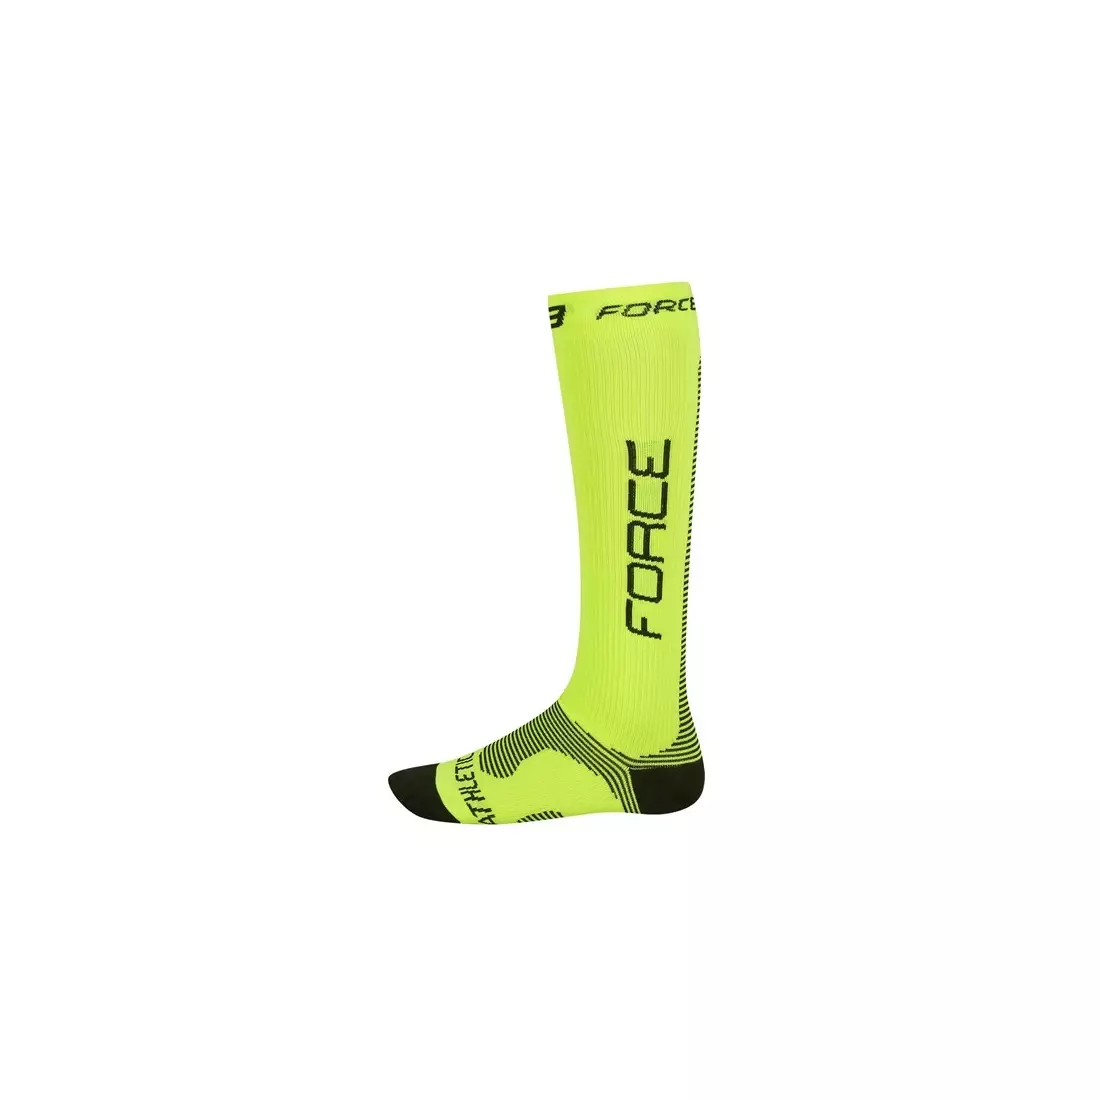 FORCE compression socks PRO 90105, Colour: Fluor